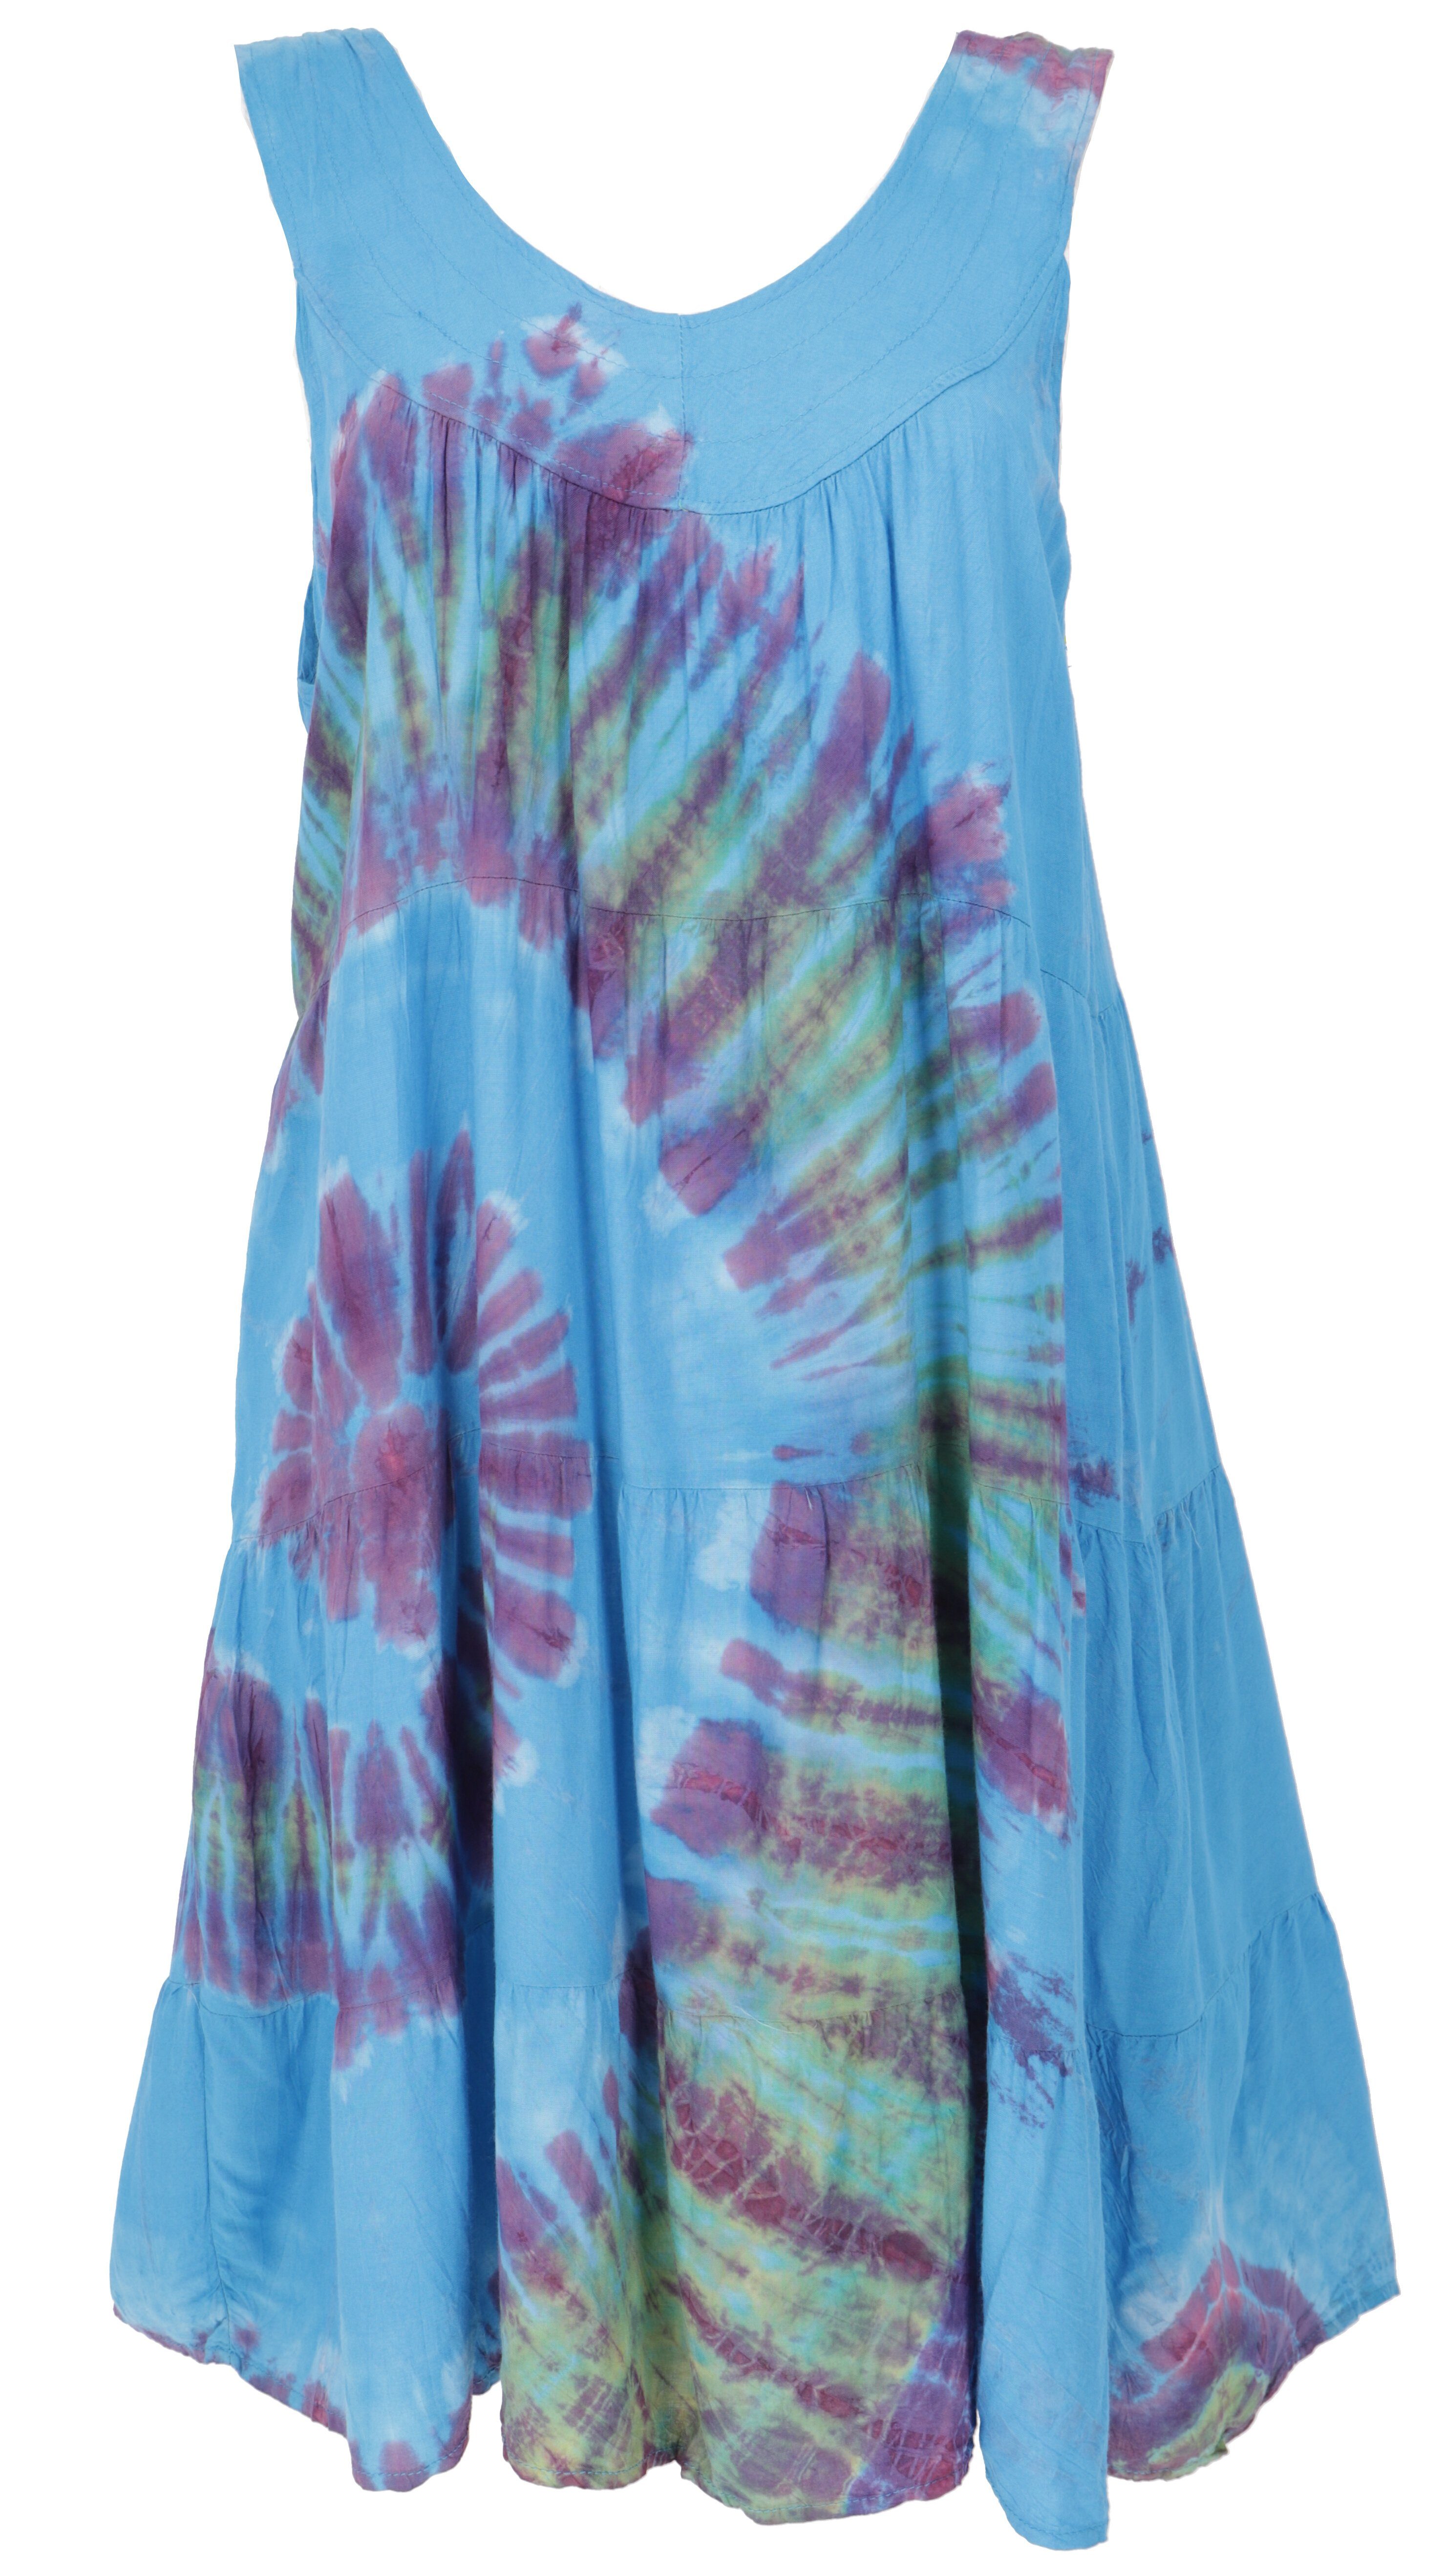 Guru-Shop Midikleid Batik Tunika, Hippie chic, Strandkleid - blau alternative Bekleidung